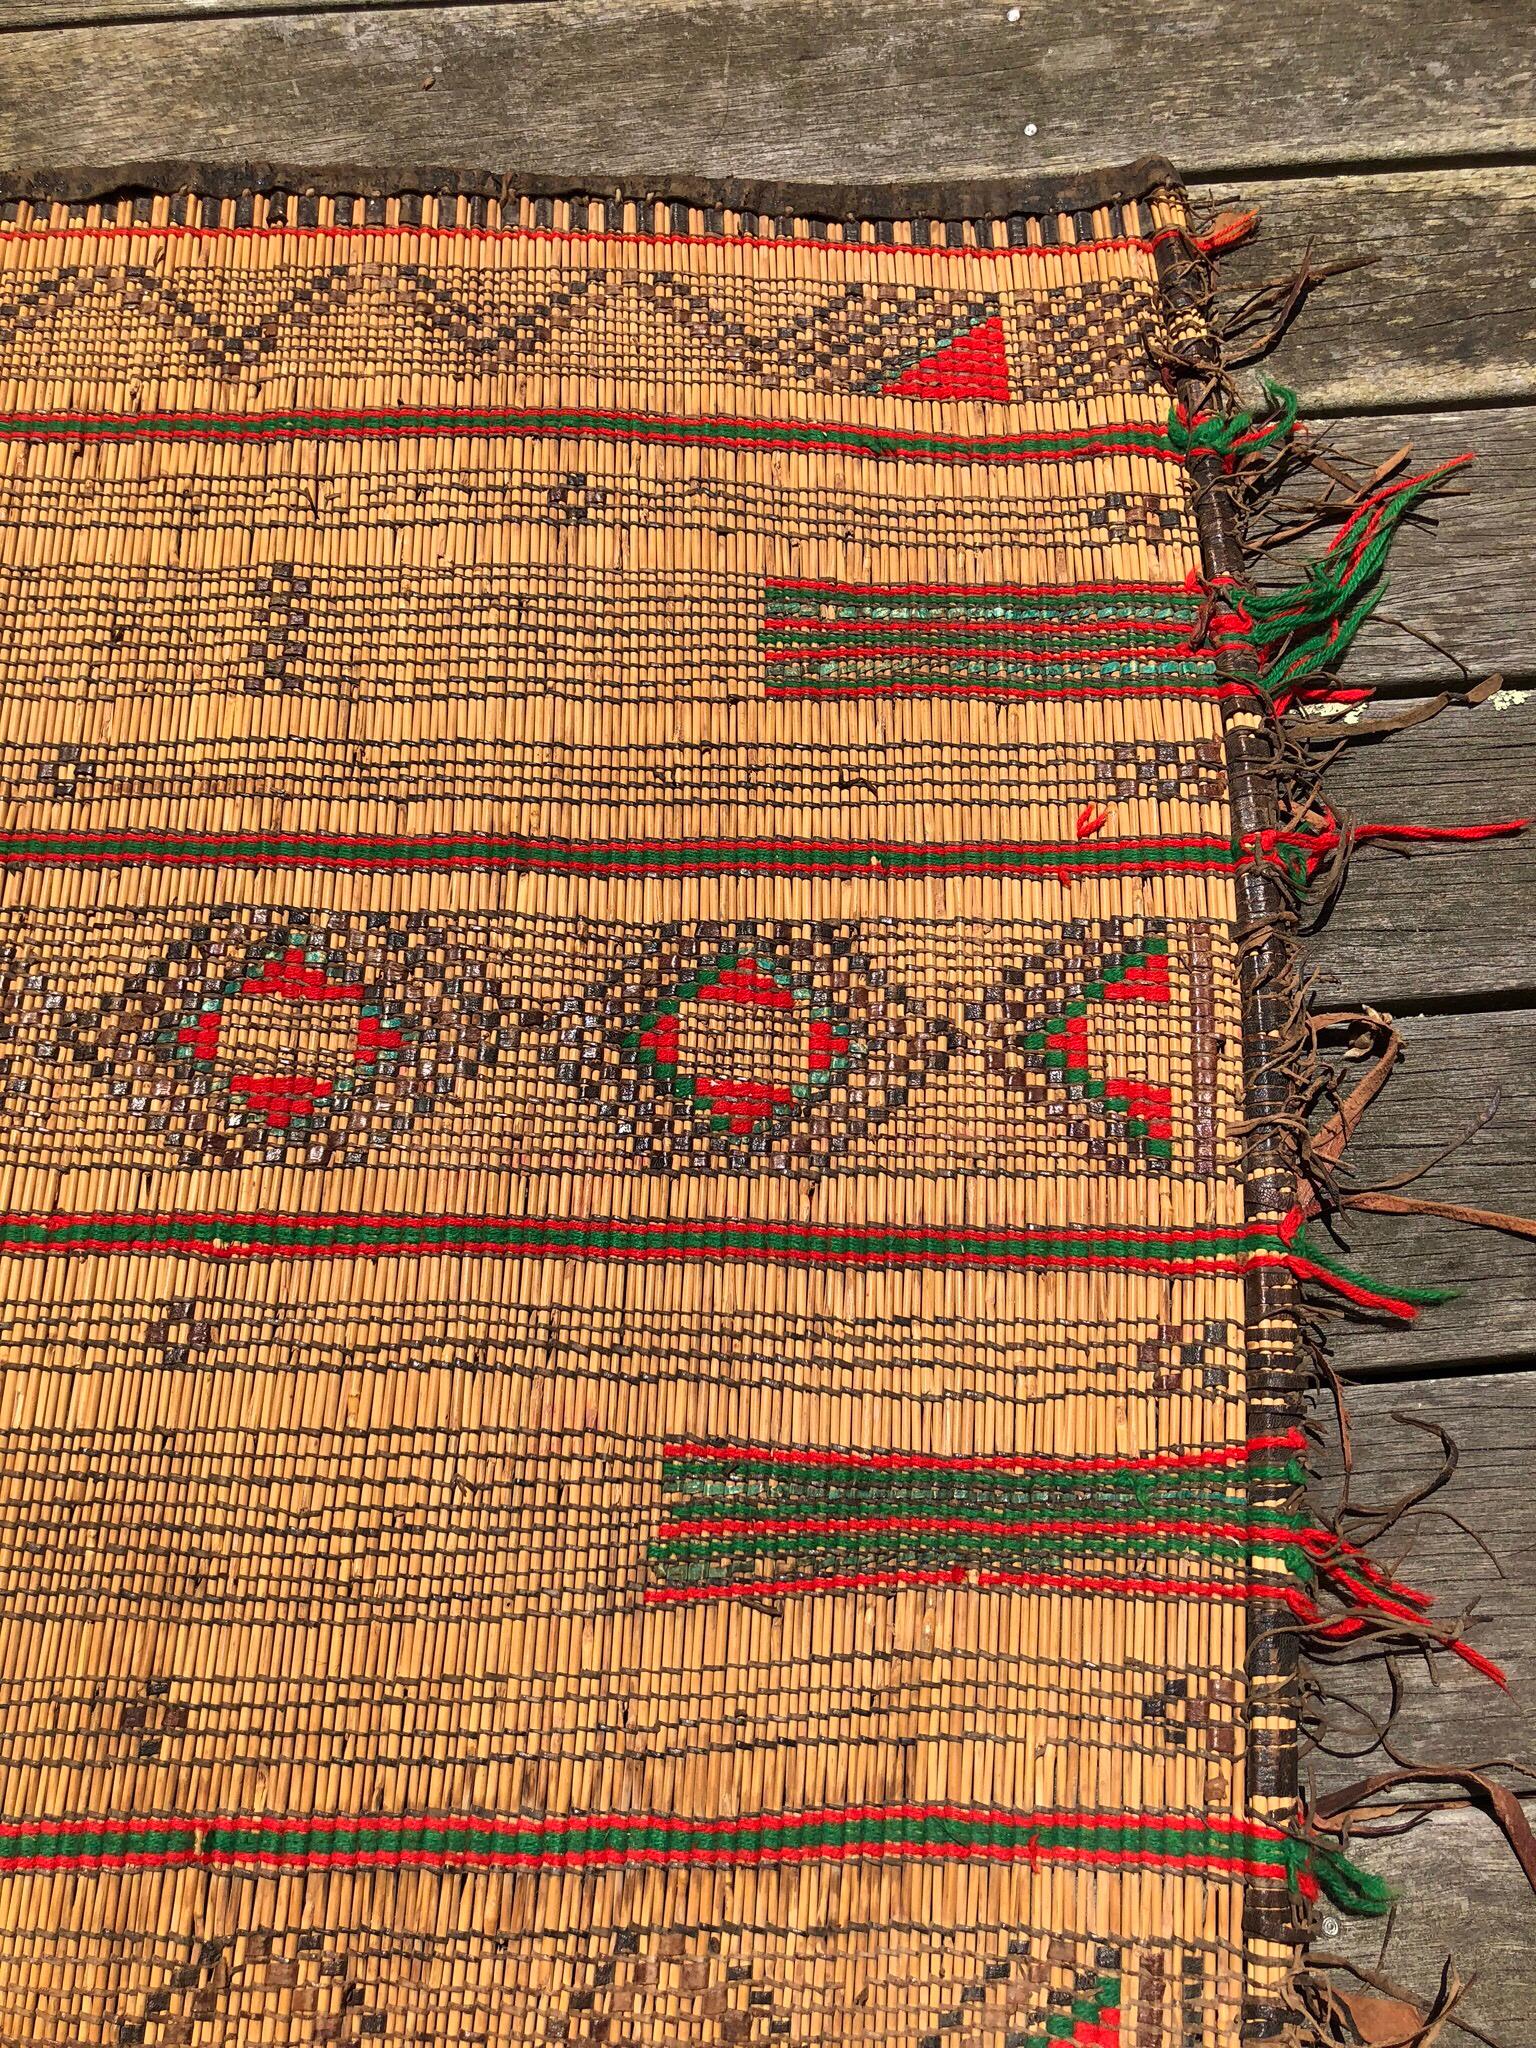 Hand-Woven Vintage Tuareg Reed Mat - Handwoven African Tribal Rug from Sahara Desert